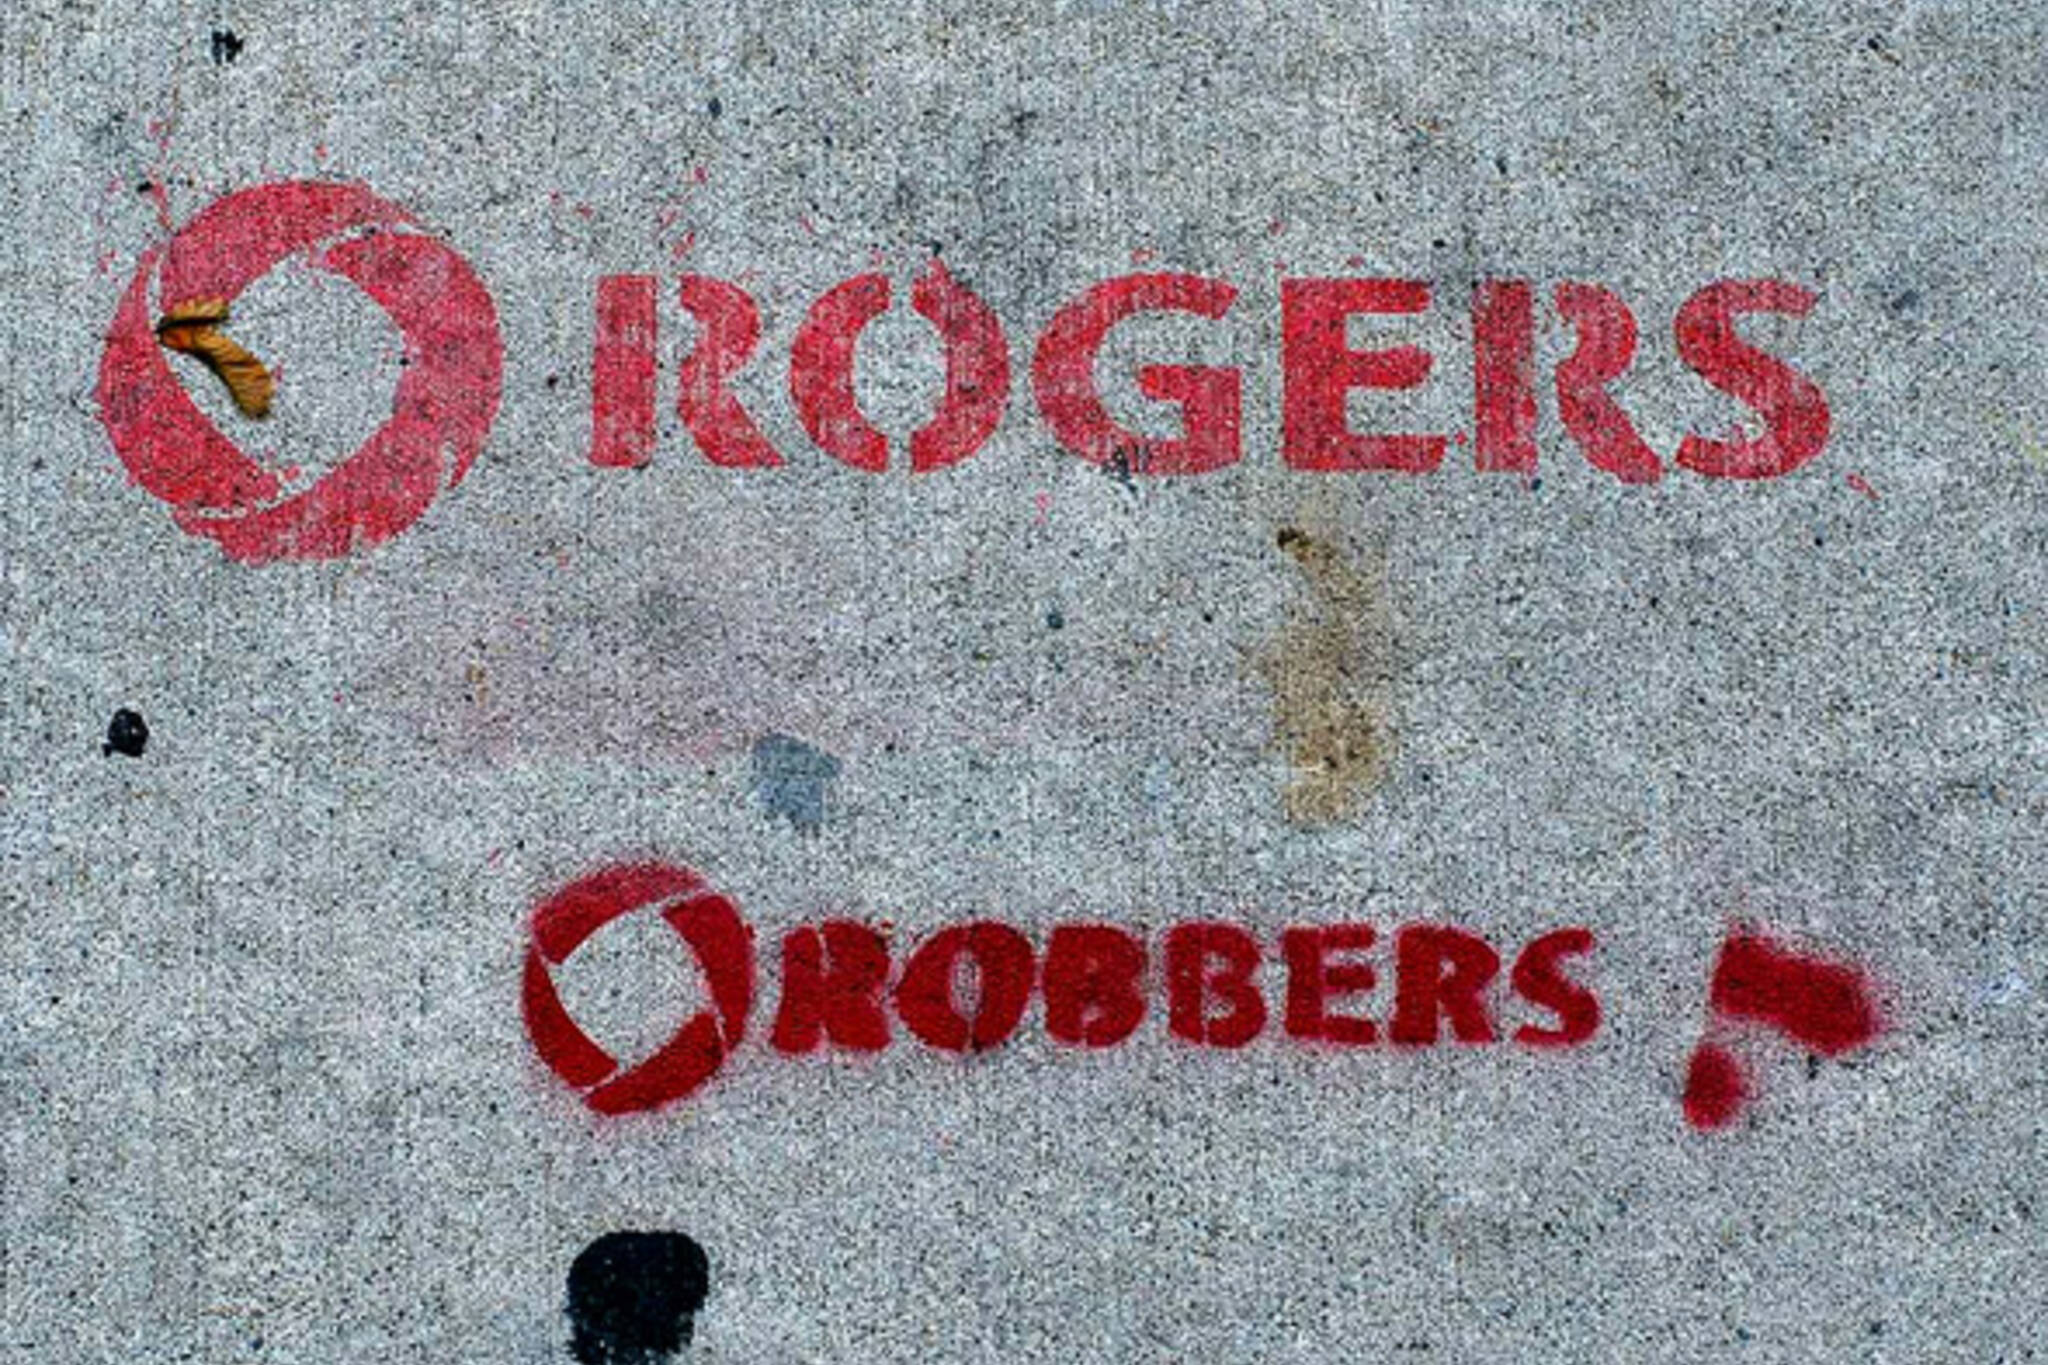 Rogers Sidewalk Ads